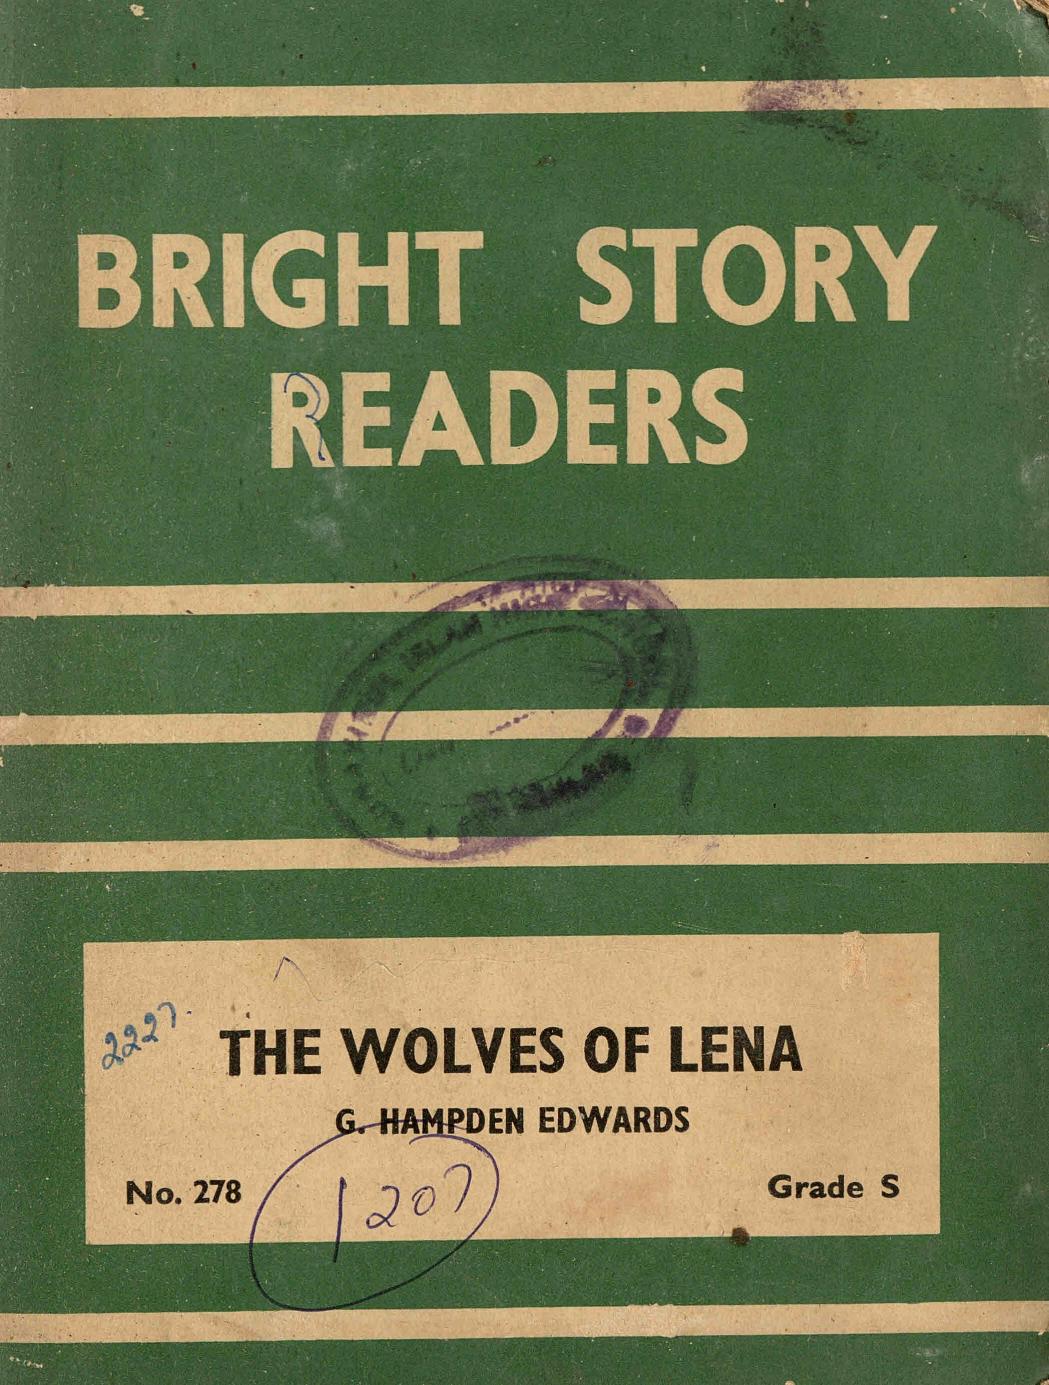  The Wolves of Lena - G. Hampden Edwards